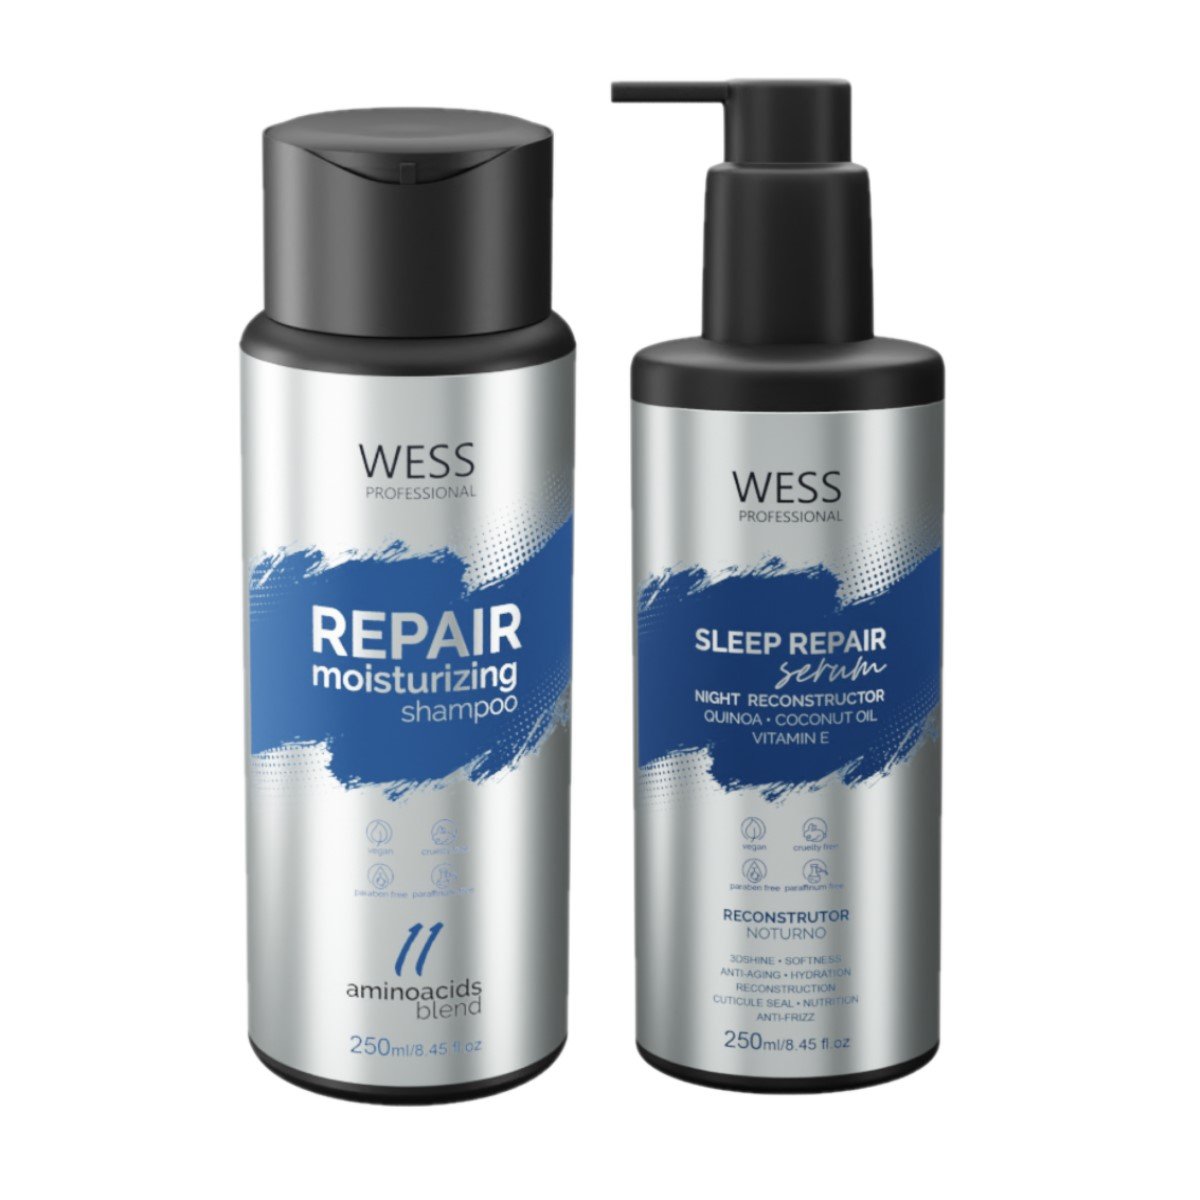 Kit Wess Repair Shampoo 250ml + Sleep Repair 250ml ÚNICO 1